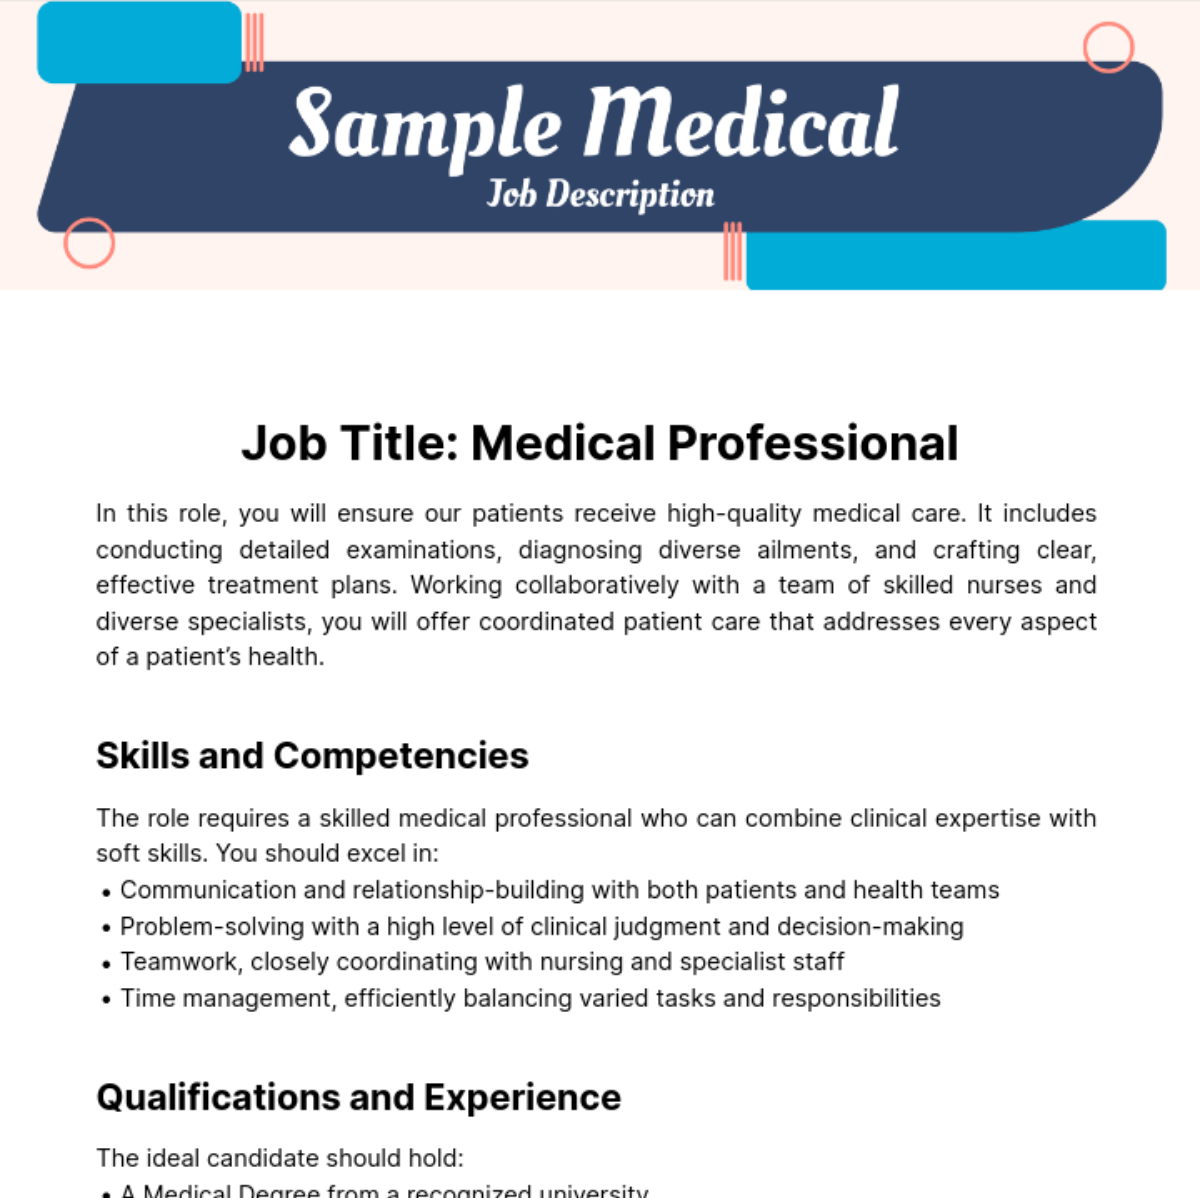 Sample Medical Job Description Template